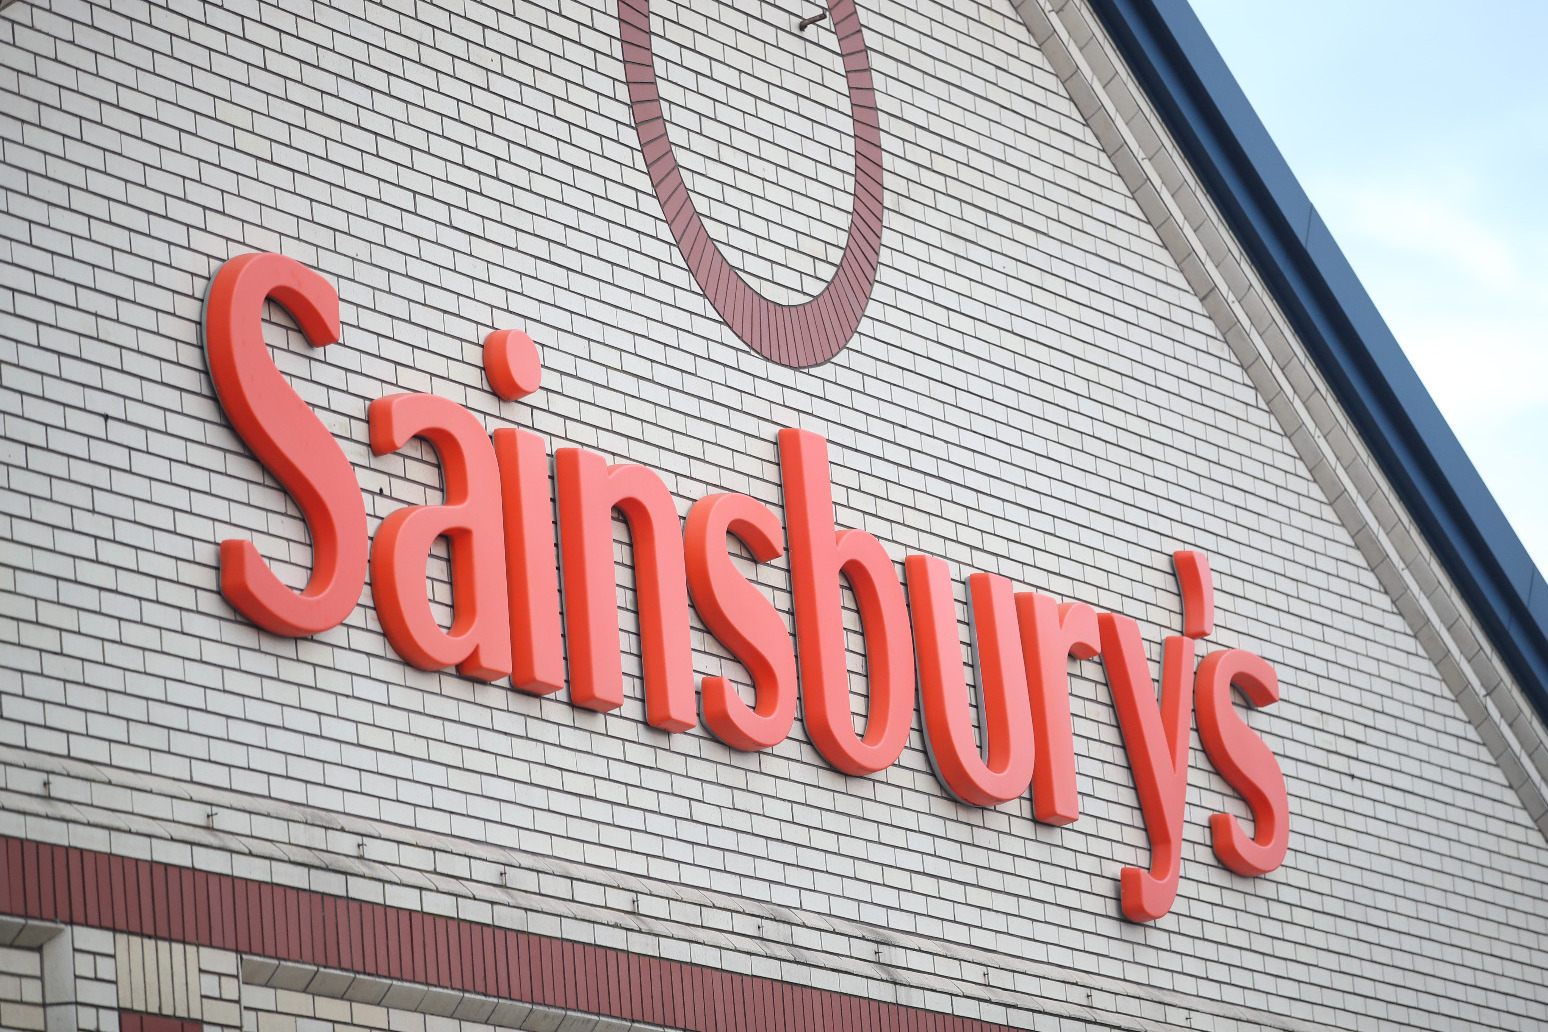 Sainsbury’s brings net-zero target forward by five years 